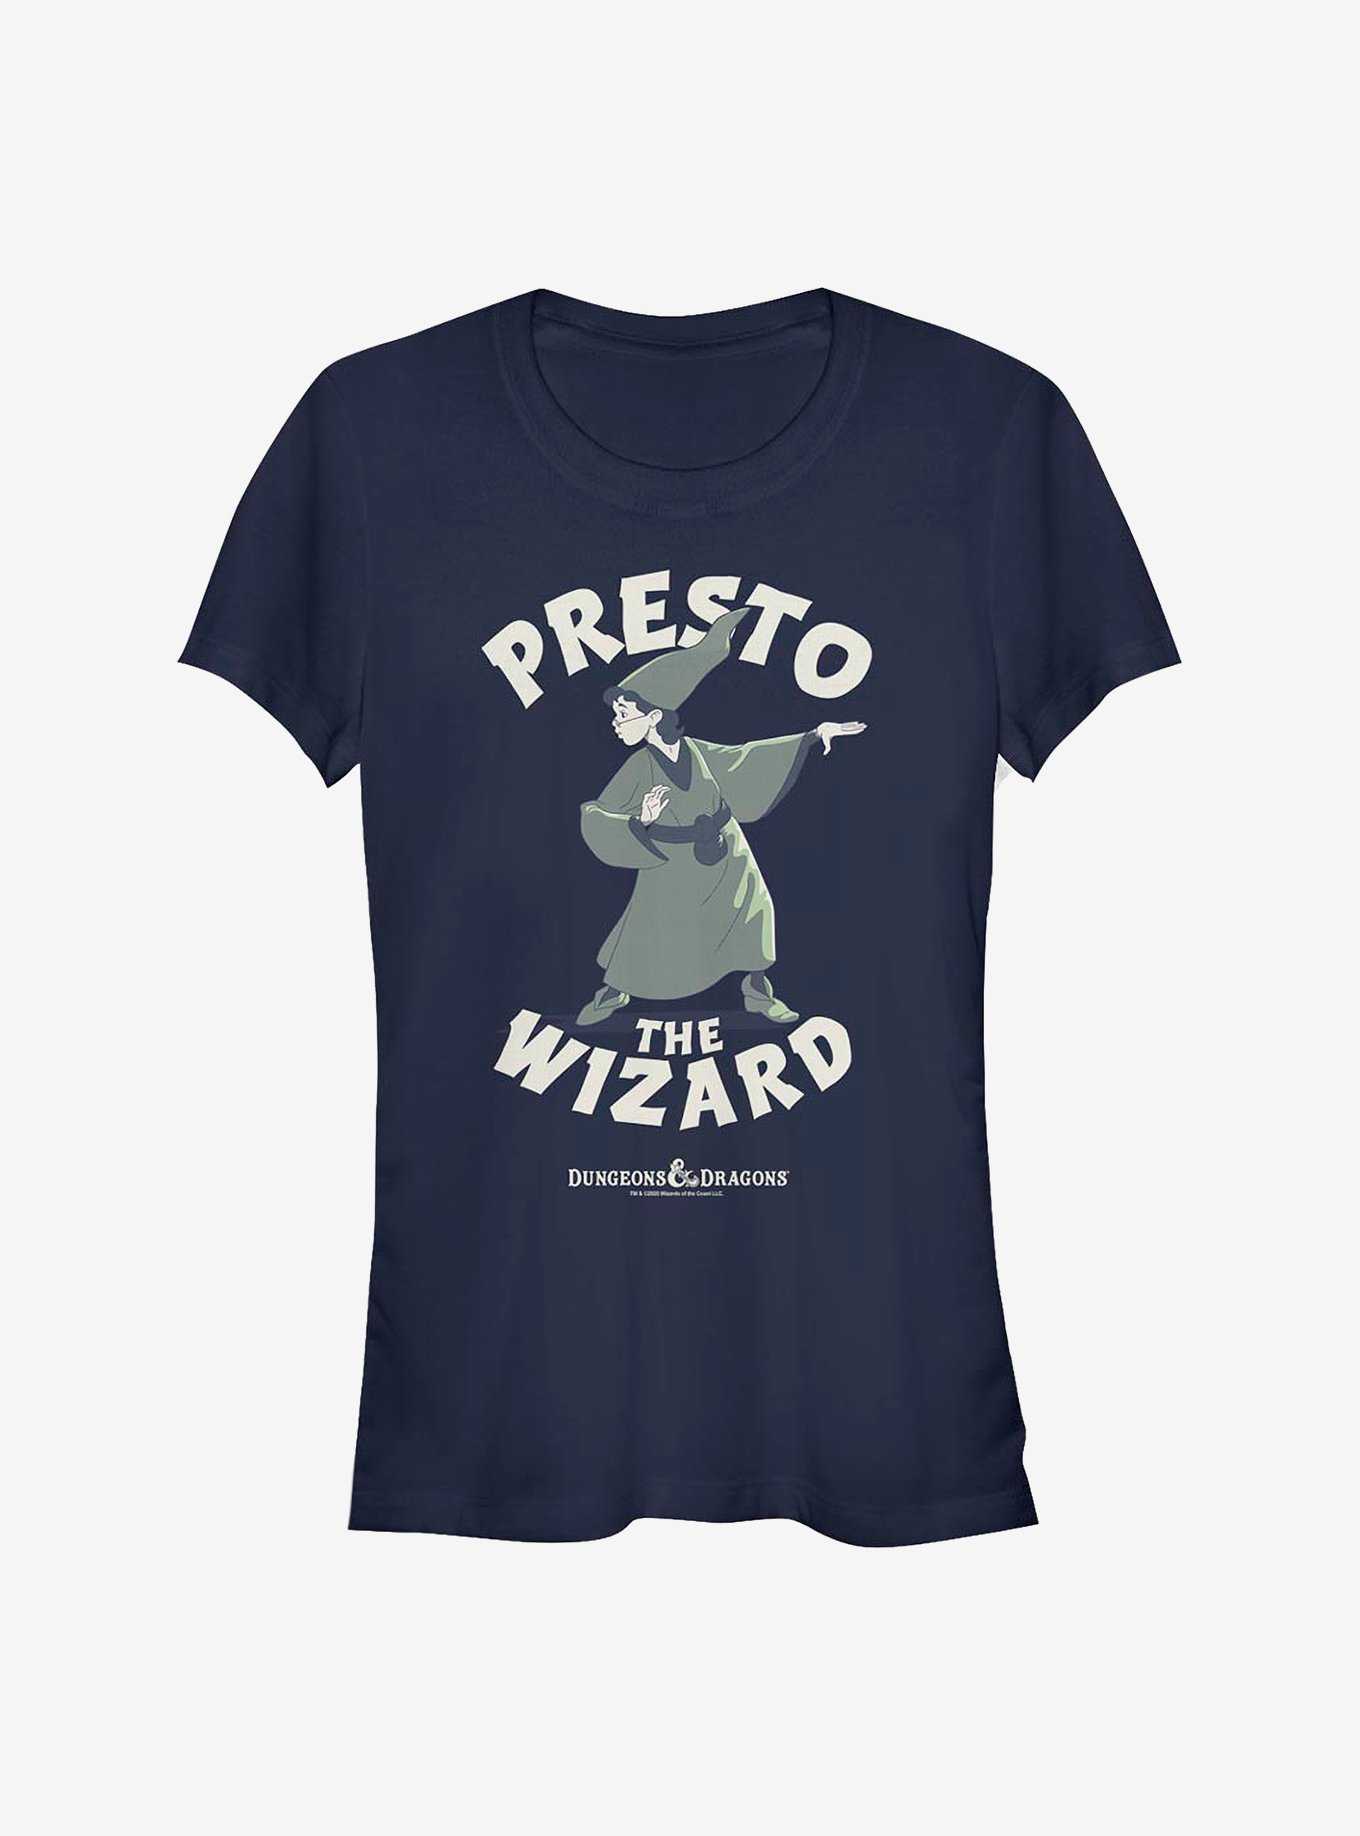 Dungeons & Dragons Presto Wizard Girls T-Shirt, , hi-res